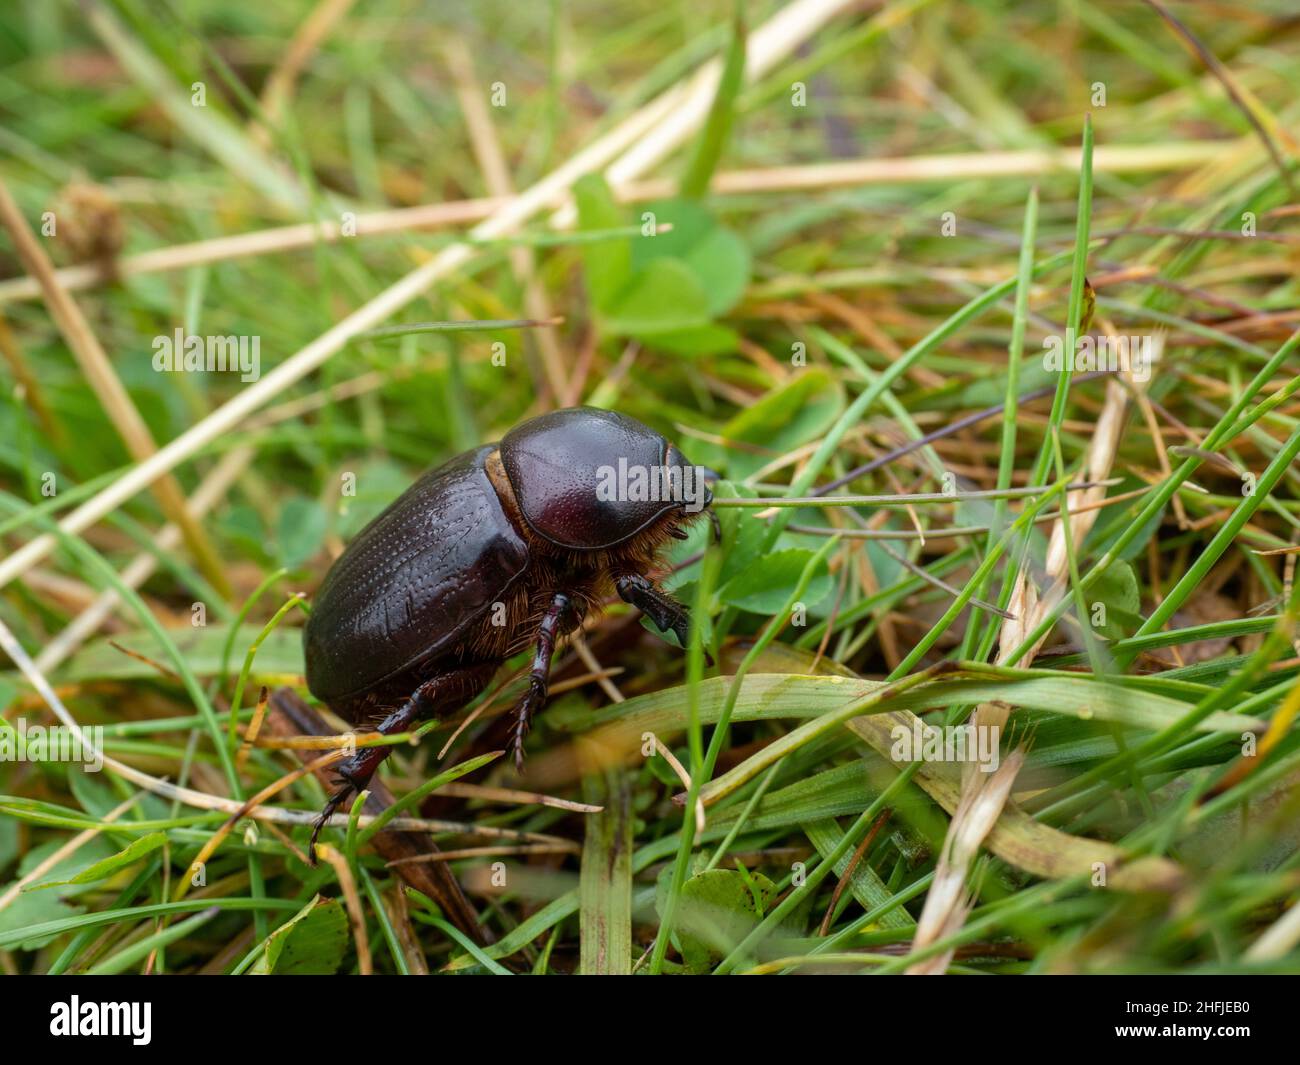 Adult Red-headed cockchafer beetle in grasslands in alpine Victoria, Australia Stock Photo